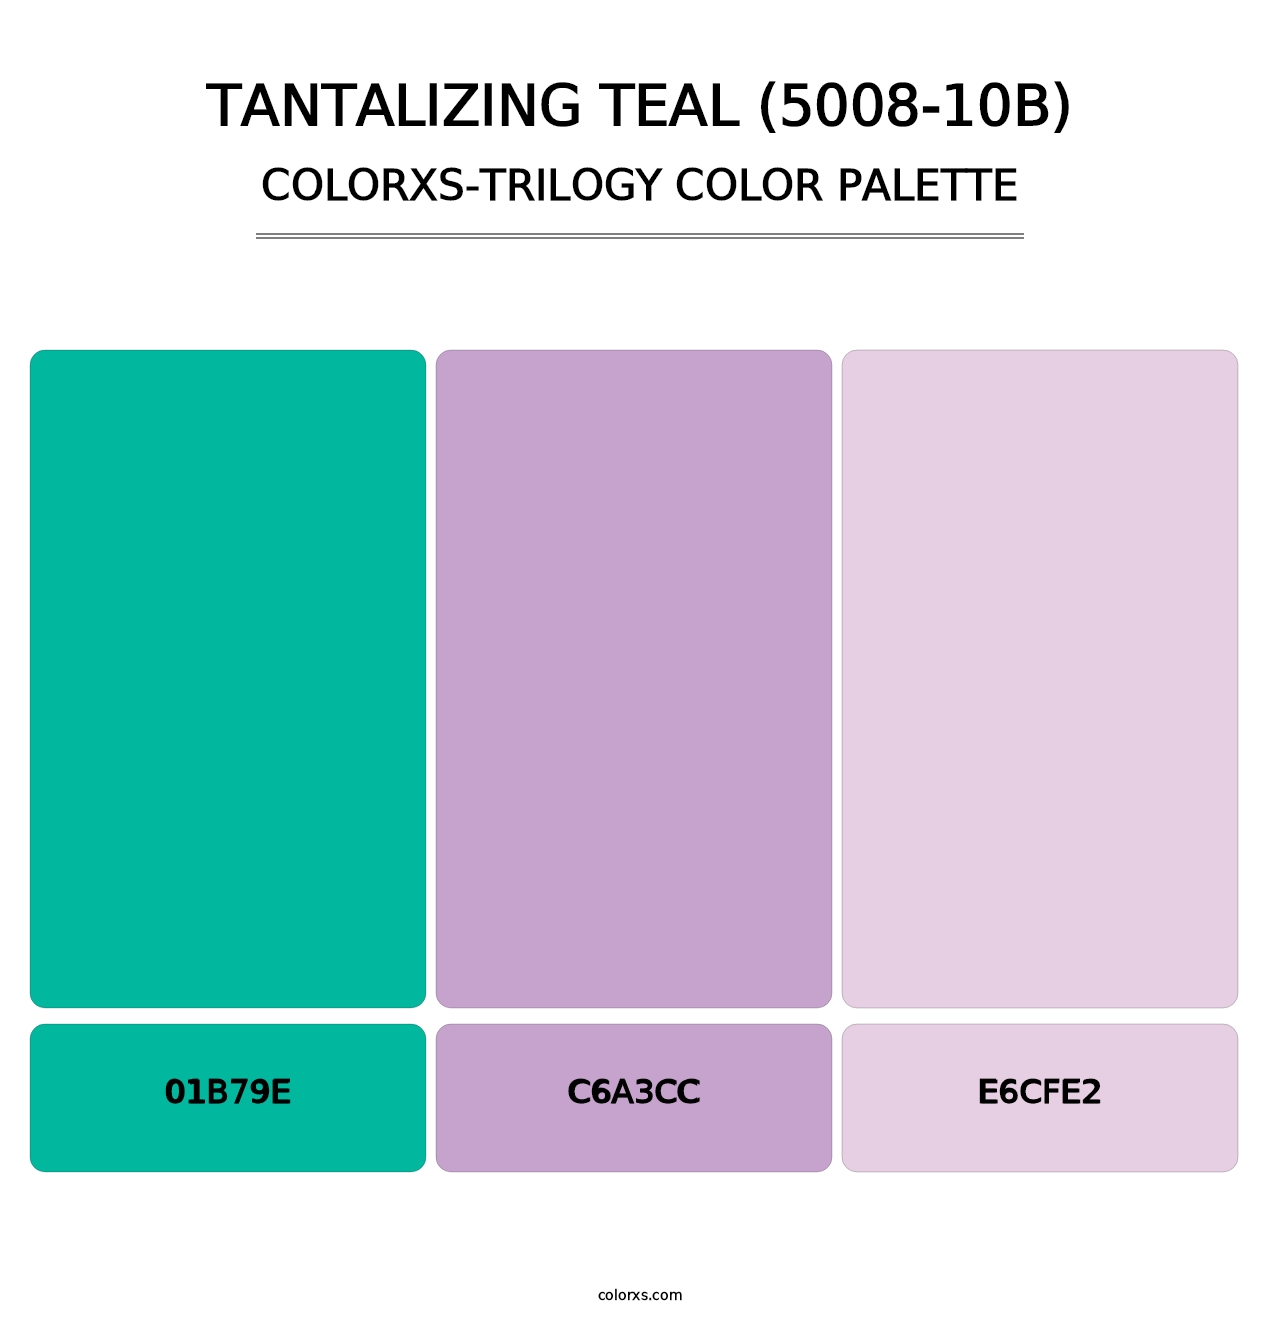 Tantalizing Teal (5008-10B) - Colorxs Trilogy Palette